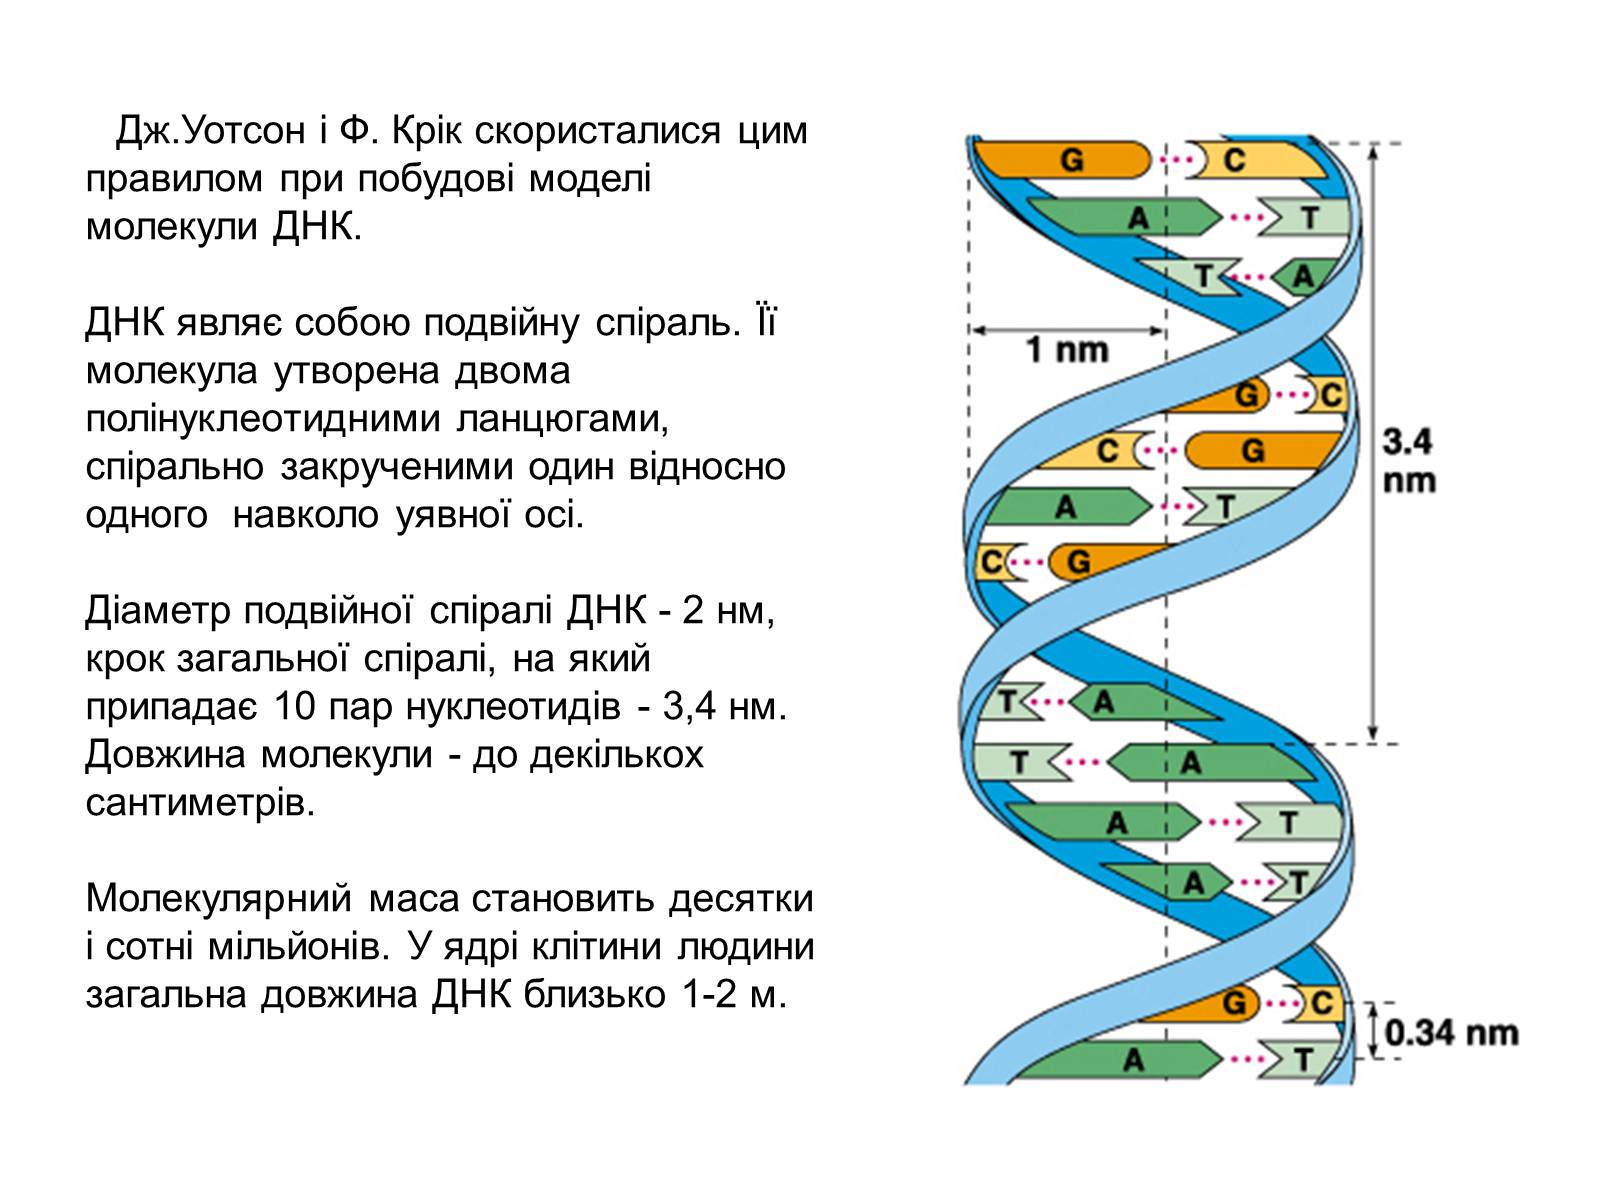 Характеристика двойной спирали ДНК